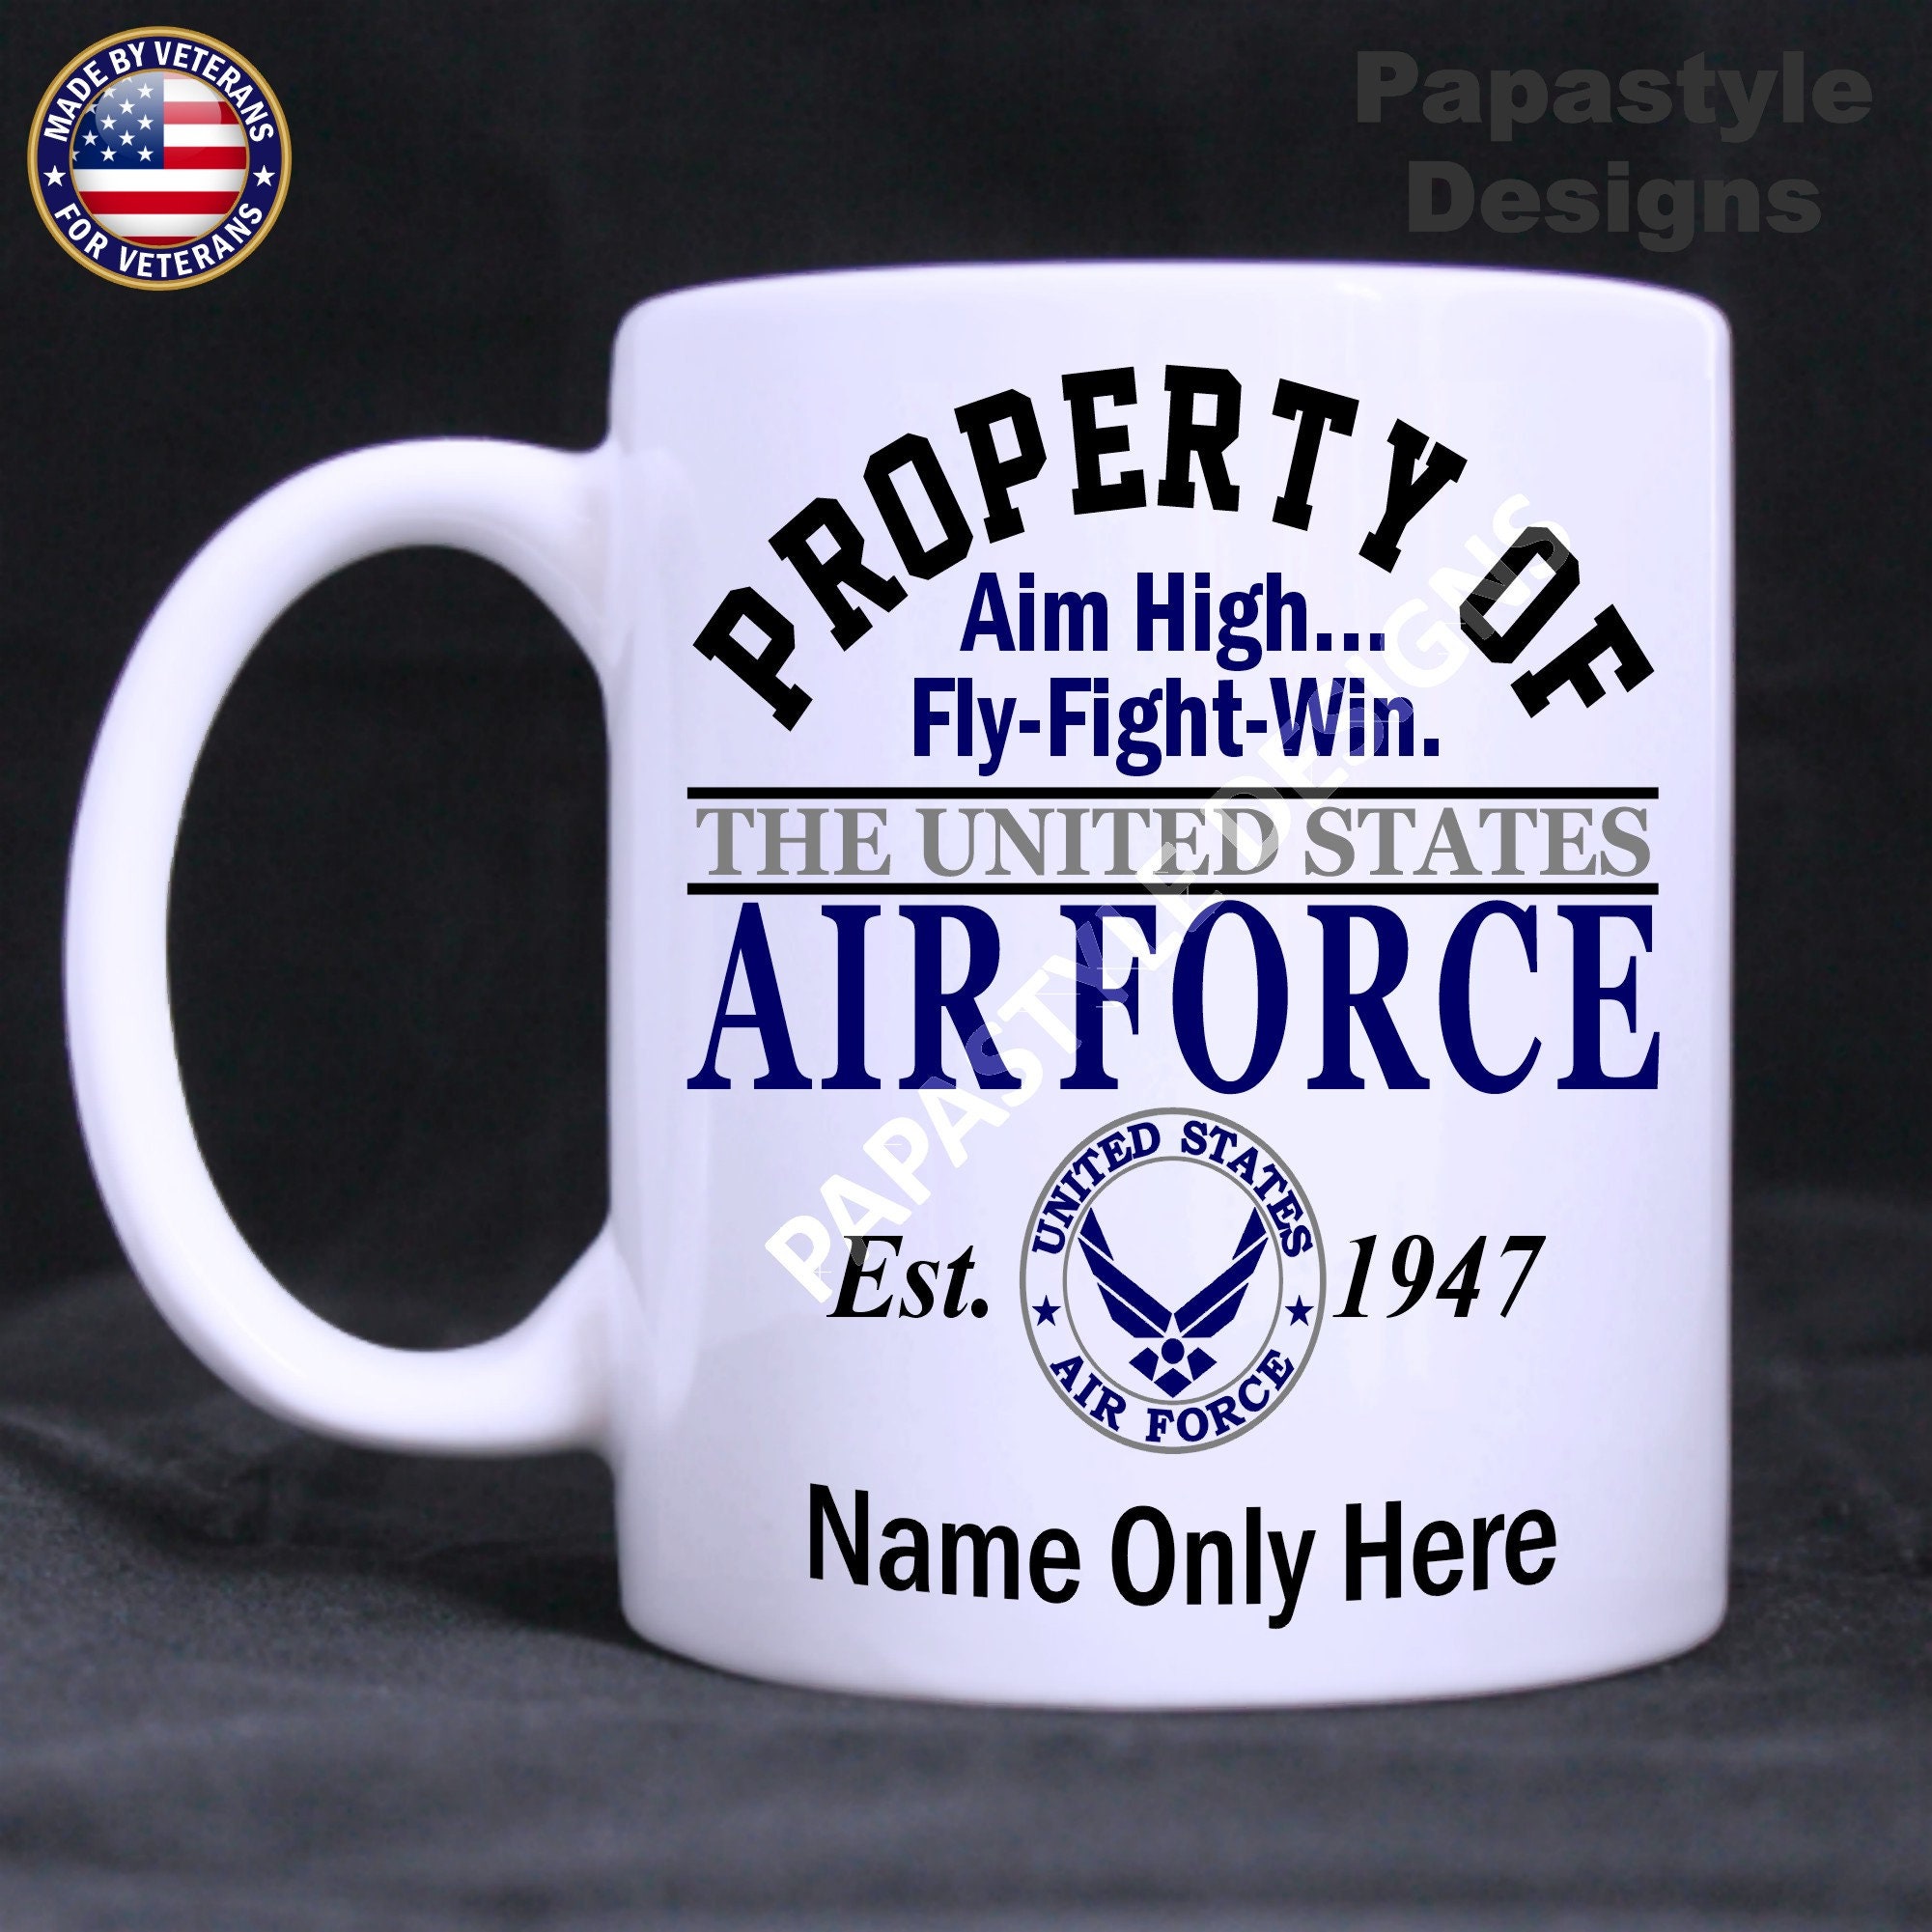 82nd Airborne 16 oz. Freedom Blue Travel Coffee Mug RTIC